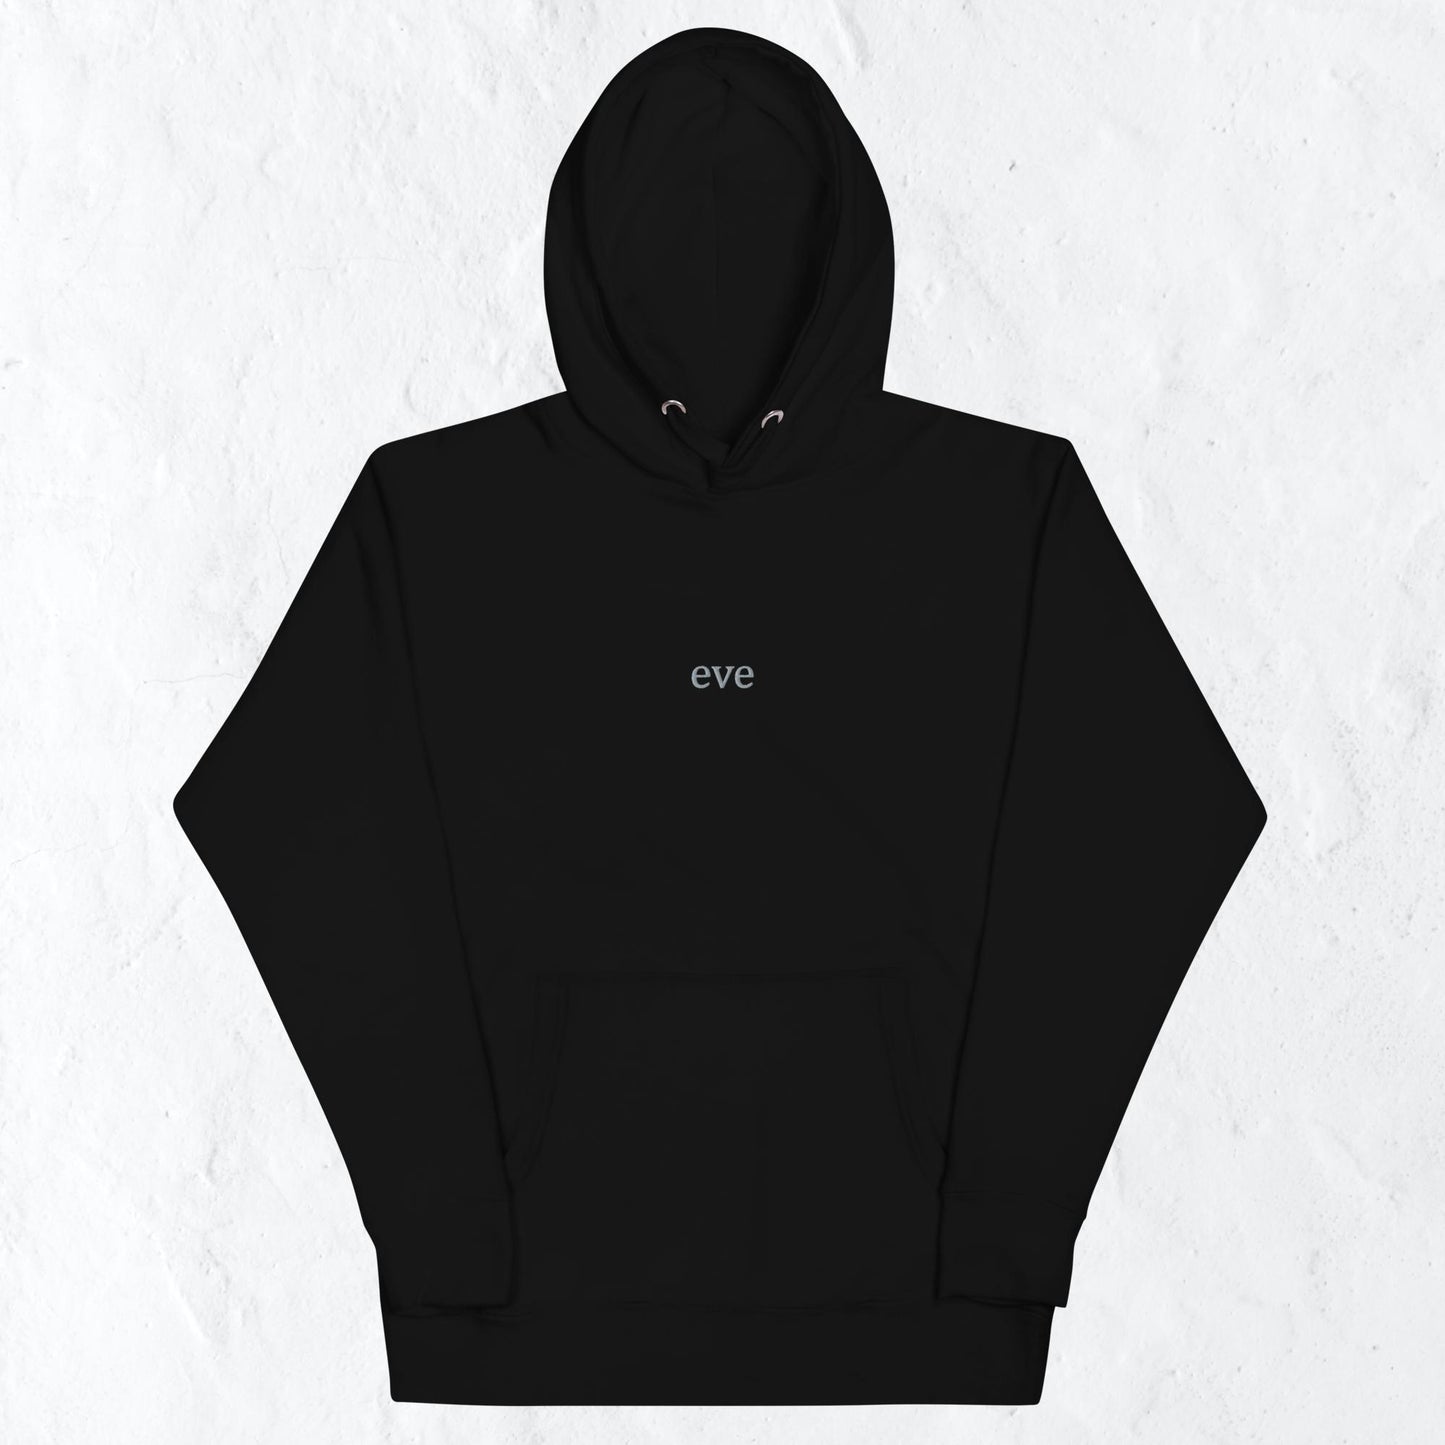 "eve" list hoodie embroidered w/art